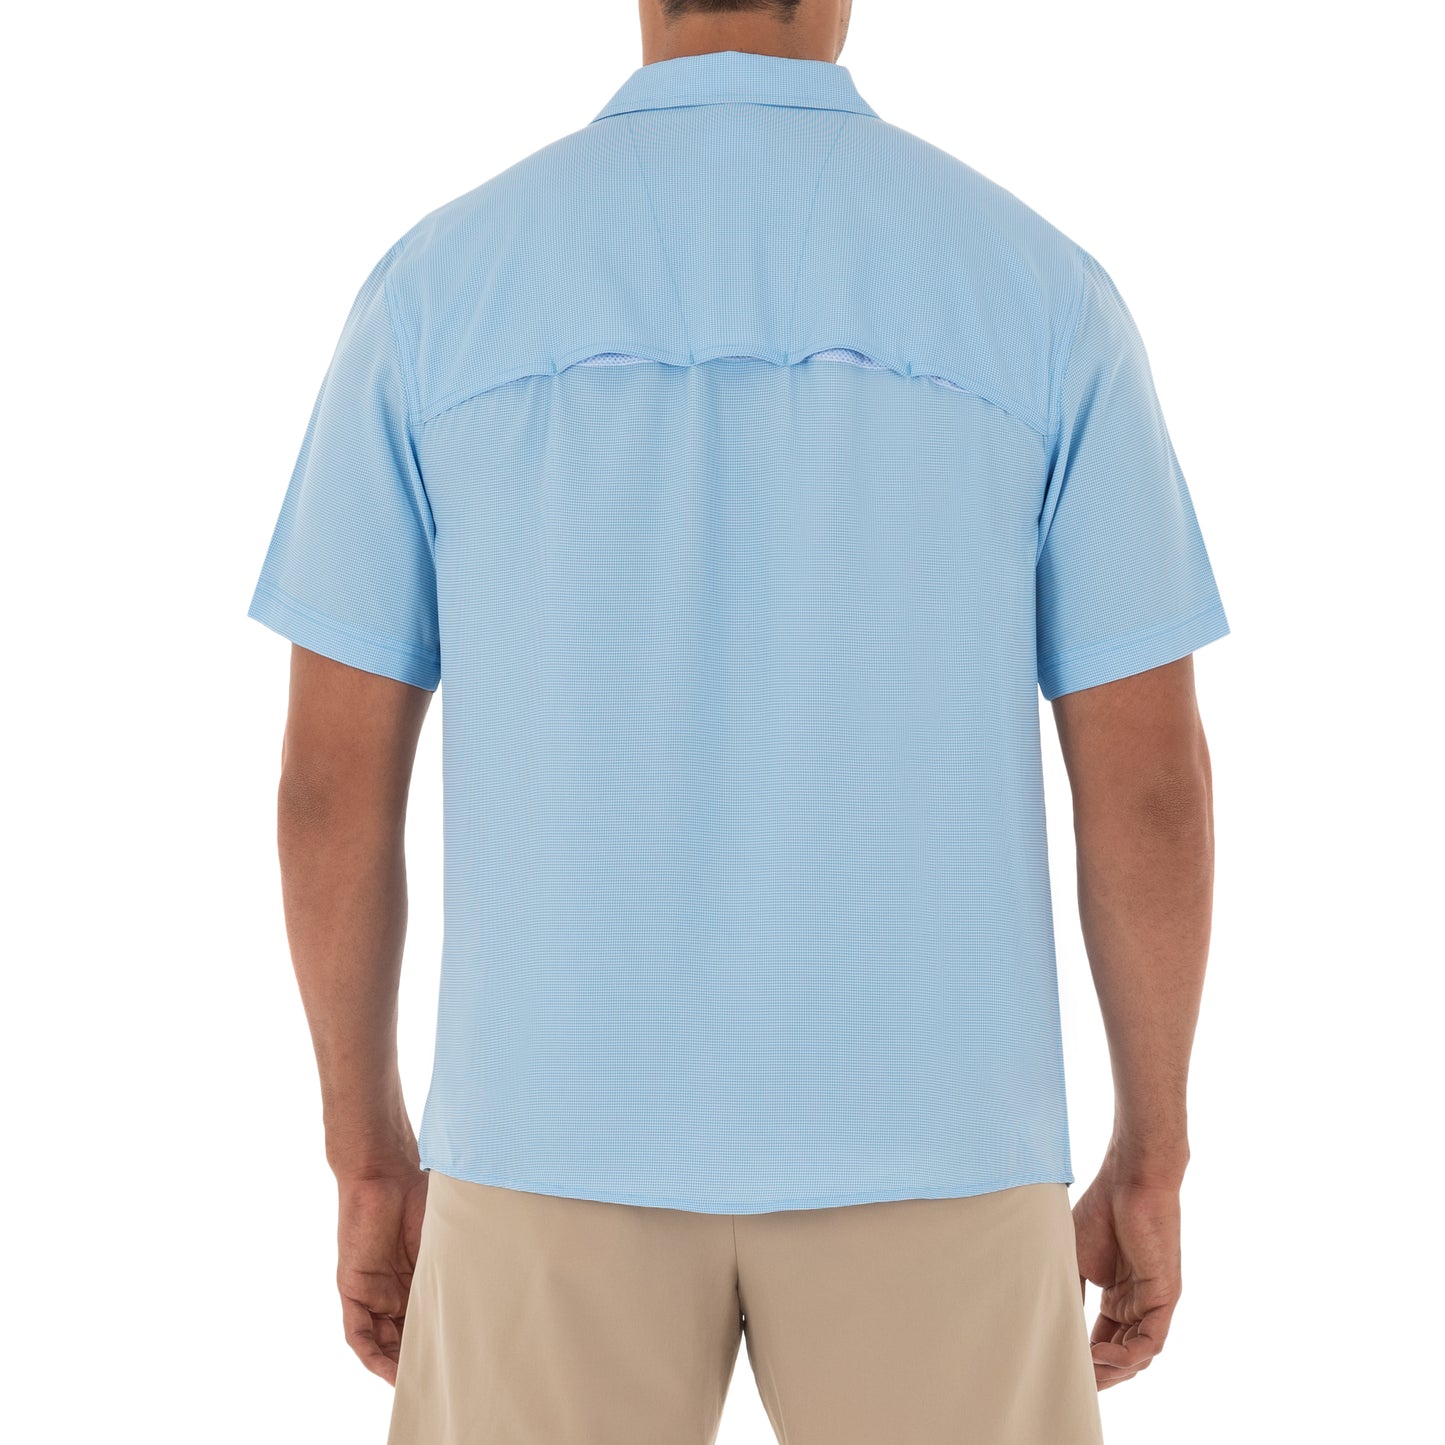 Men's Short Sleeve Texture Gingham Blue Performance Fishing Shirt